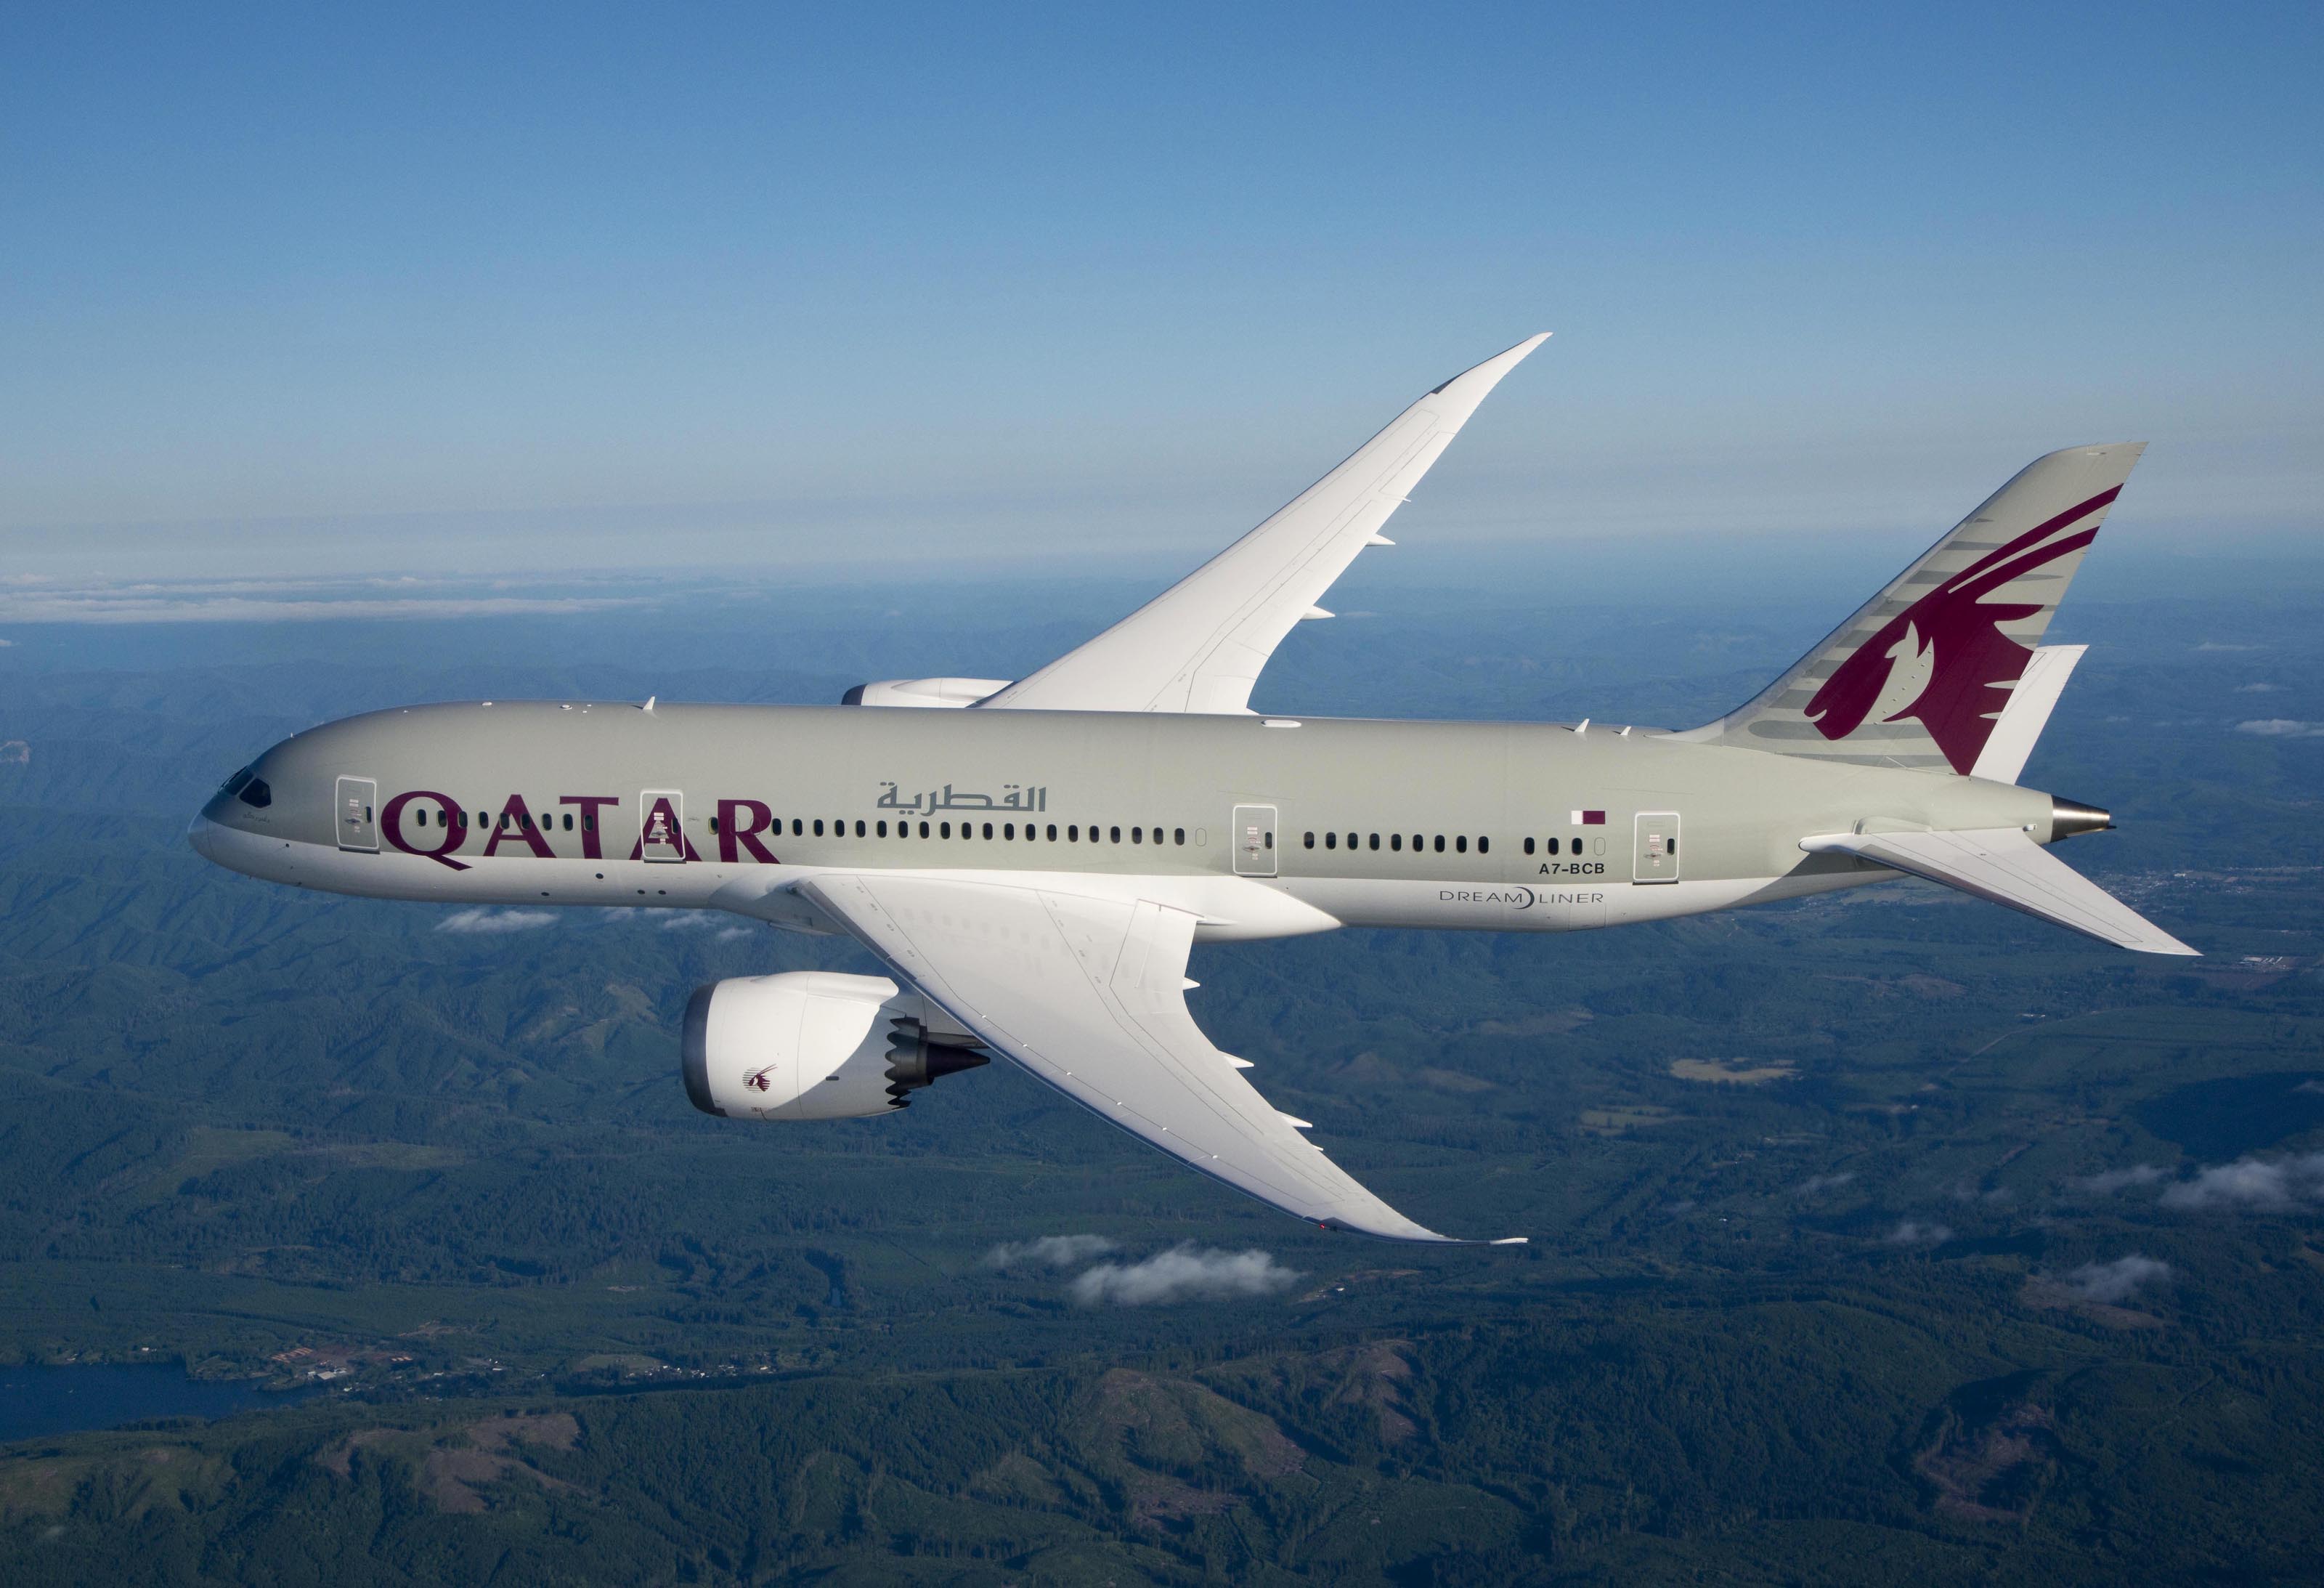 Picture from Qatar Airways.